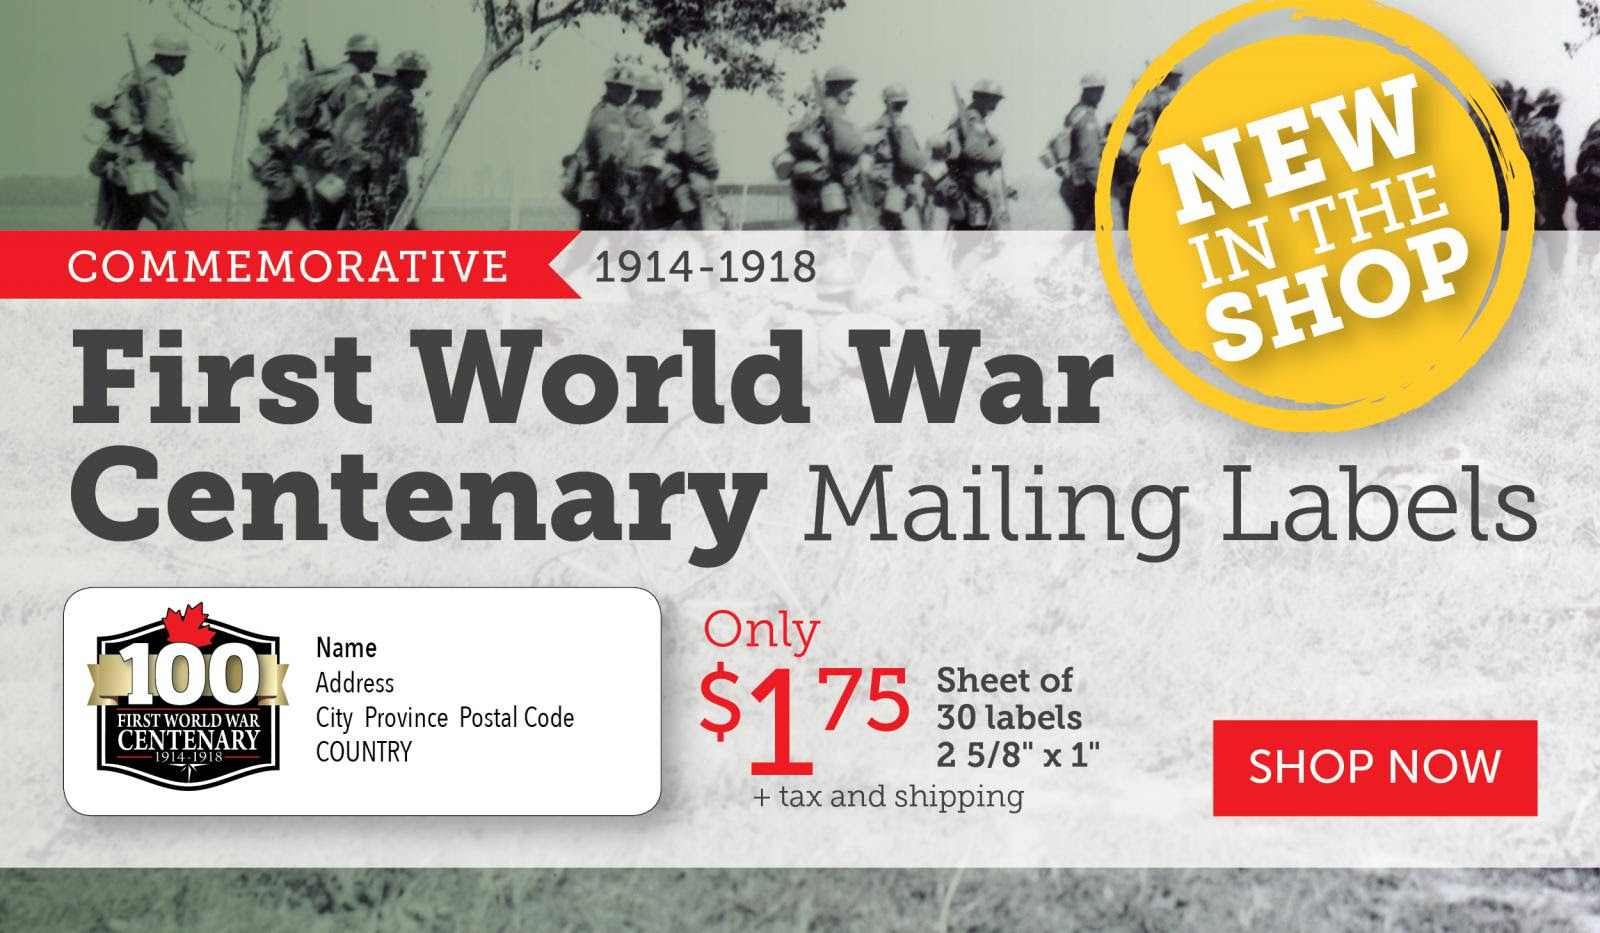 NEW First World War Centenary Mailing Labels!